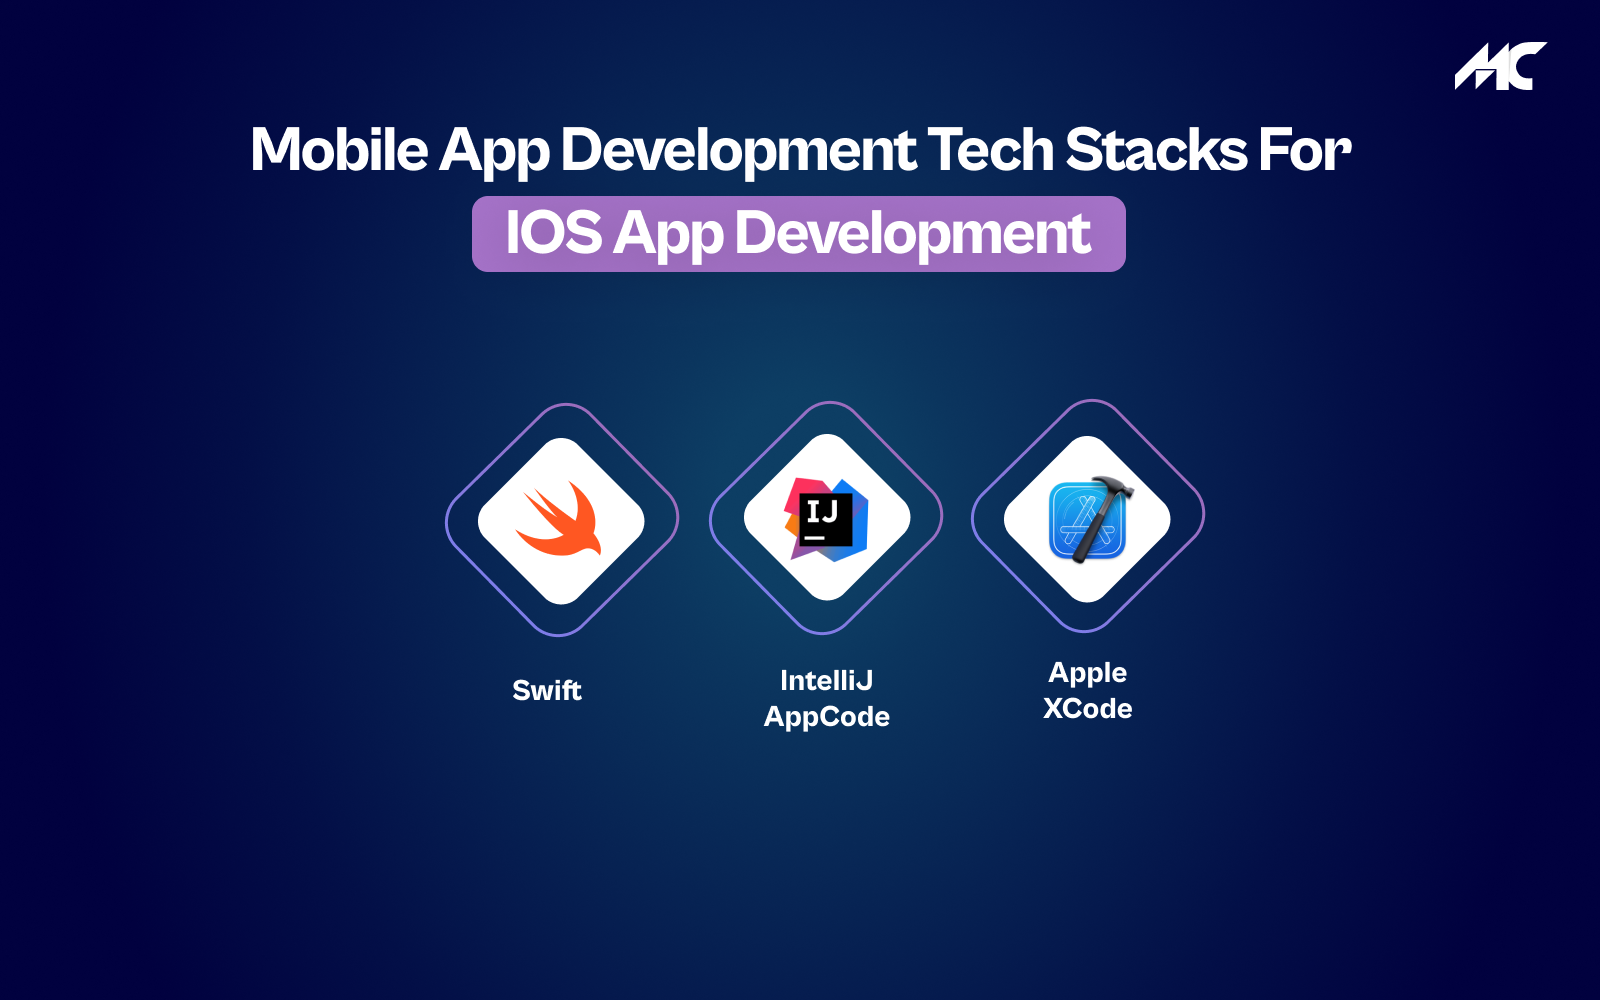 Mobile App Development Tech stacks for IOS Development